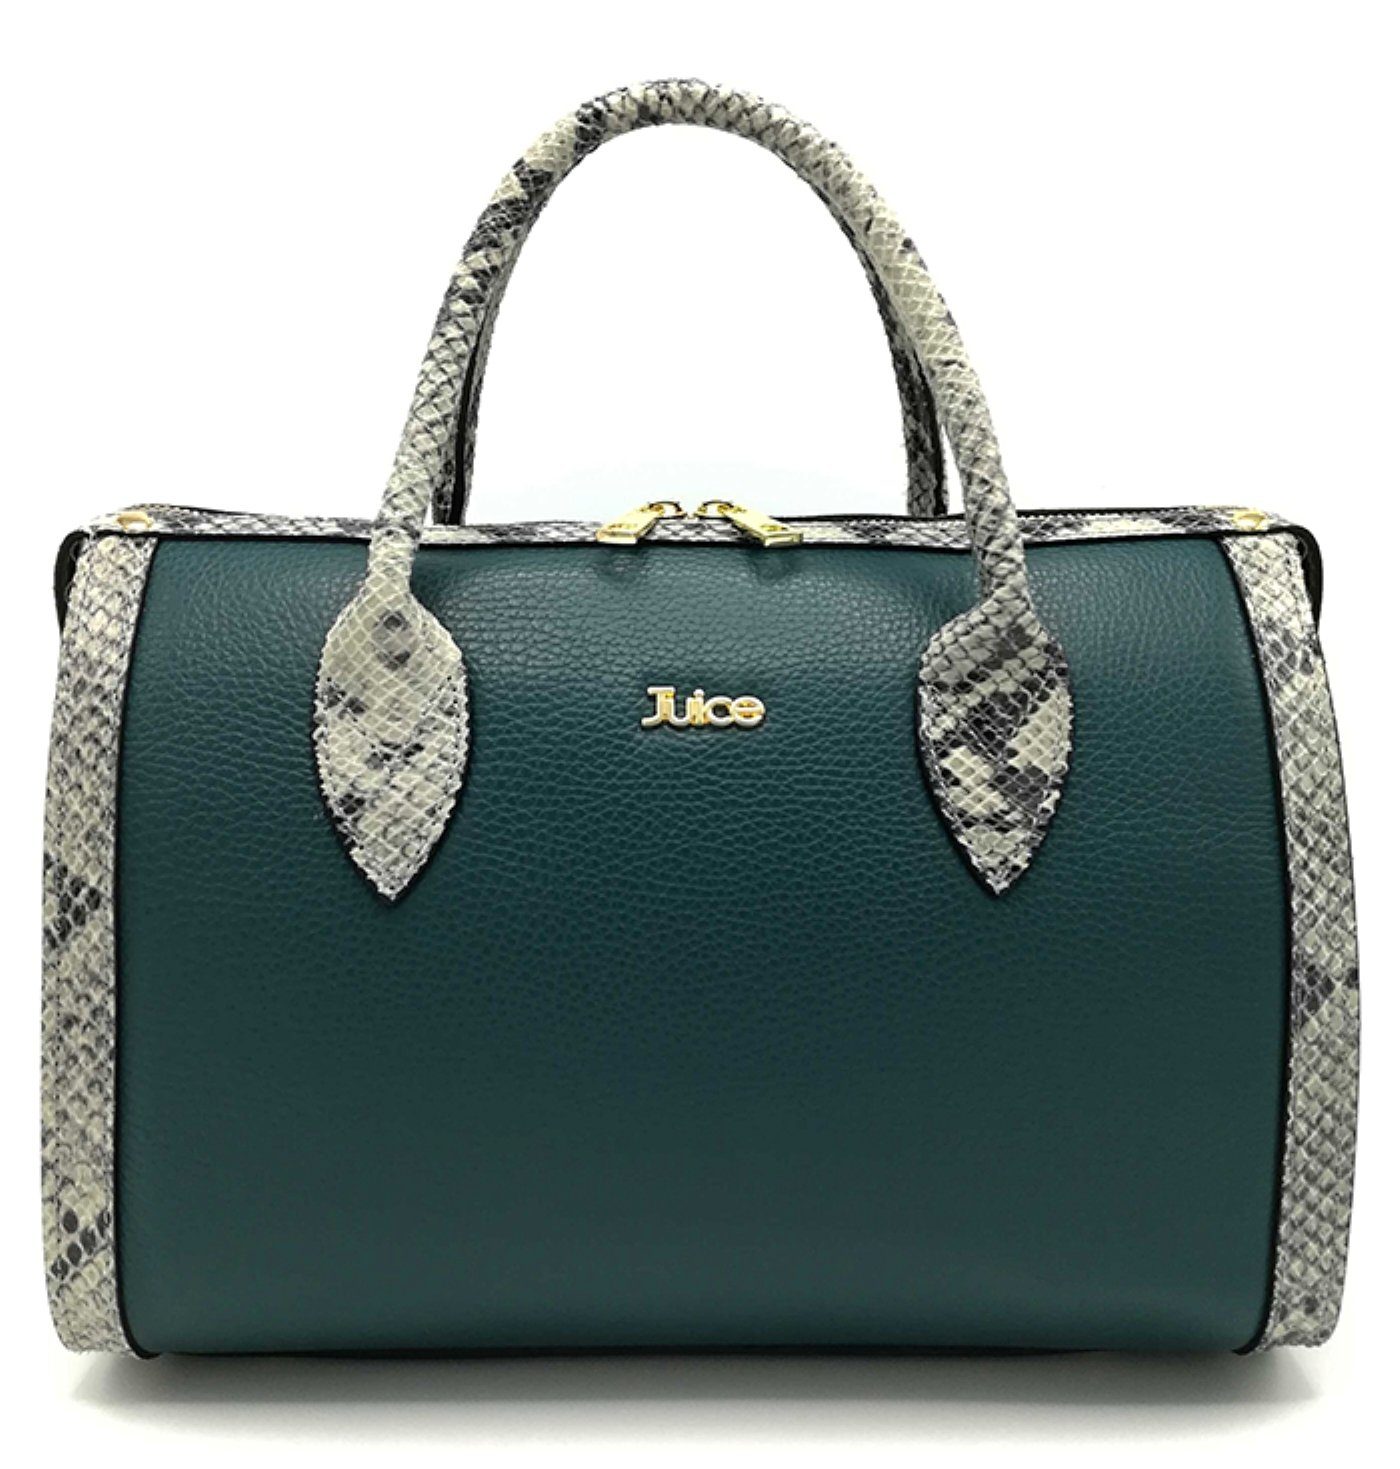 Ava & Jackson Company Handtasche VIVIANA, echtes Leder made in Italy grün-beige | Handtaschen